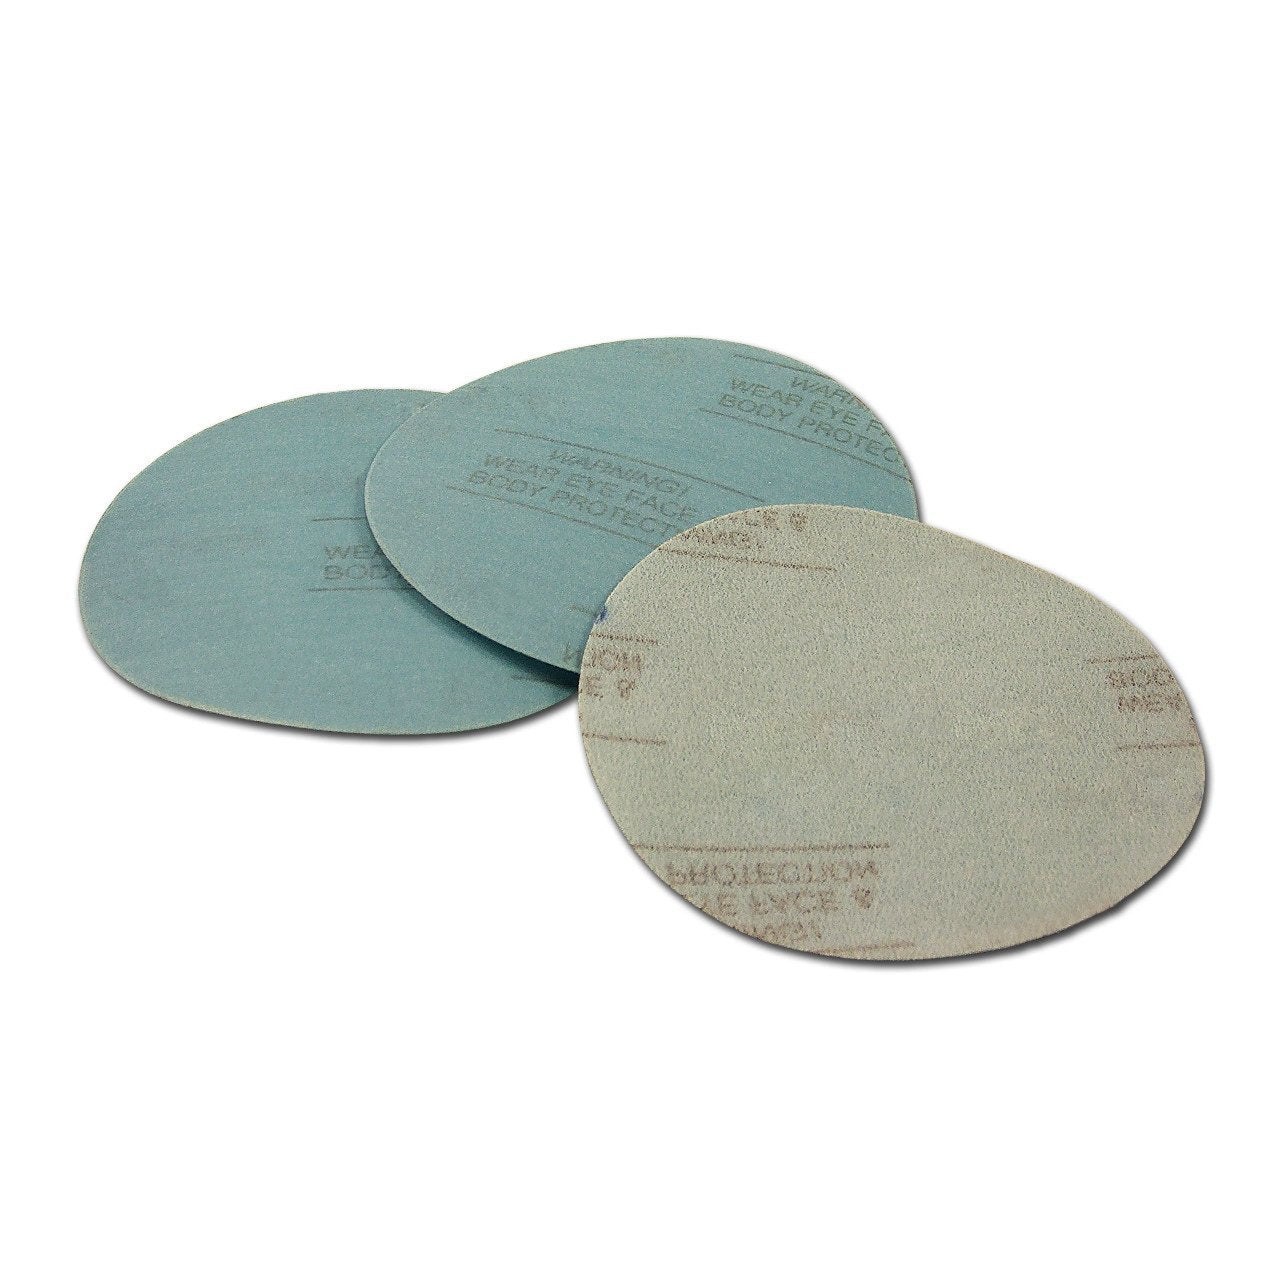 6 Inch Hook and Loop Blue Wet / Dry Sharpening Film Sanding Discs, 50 Pack - Red Label Abrasives